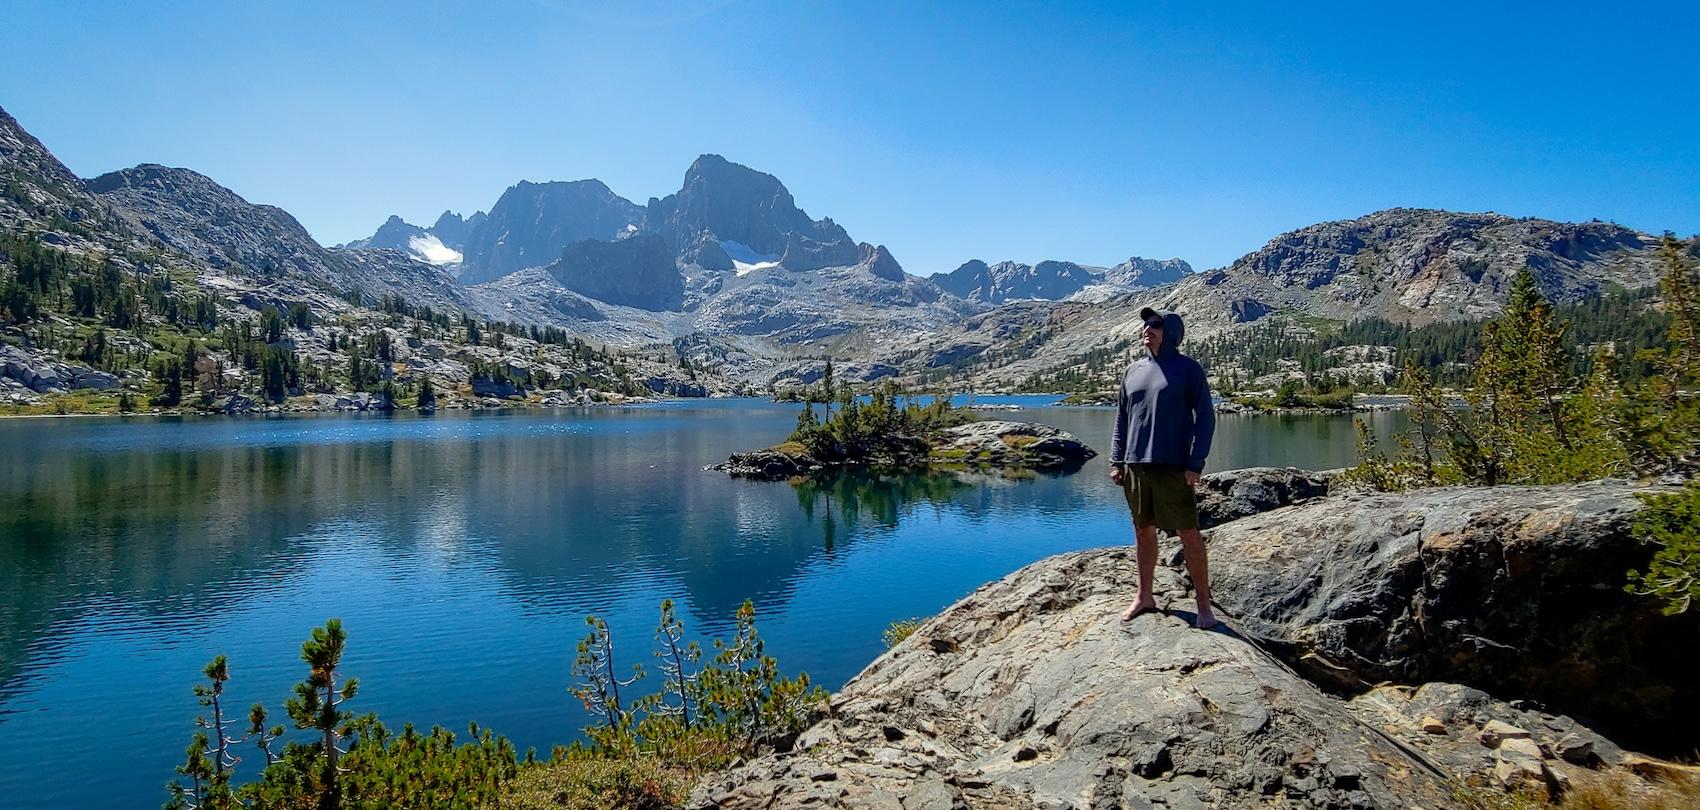 Brock Dallman on an island at Garnet Lake in the Sierras